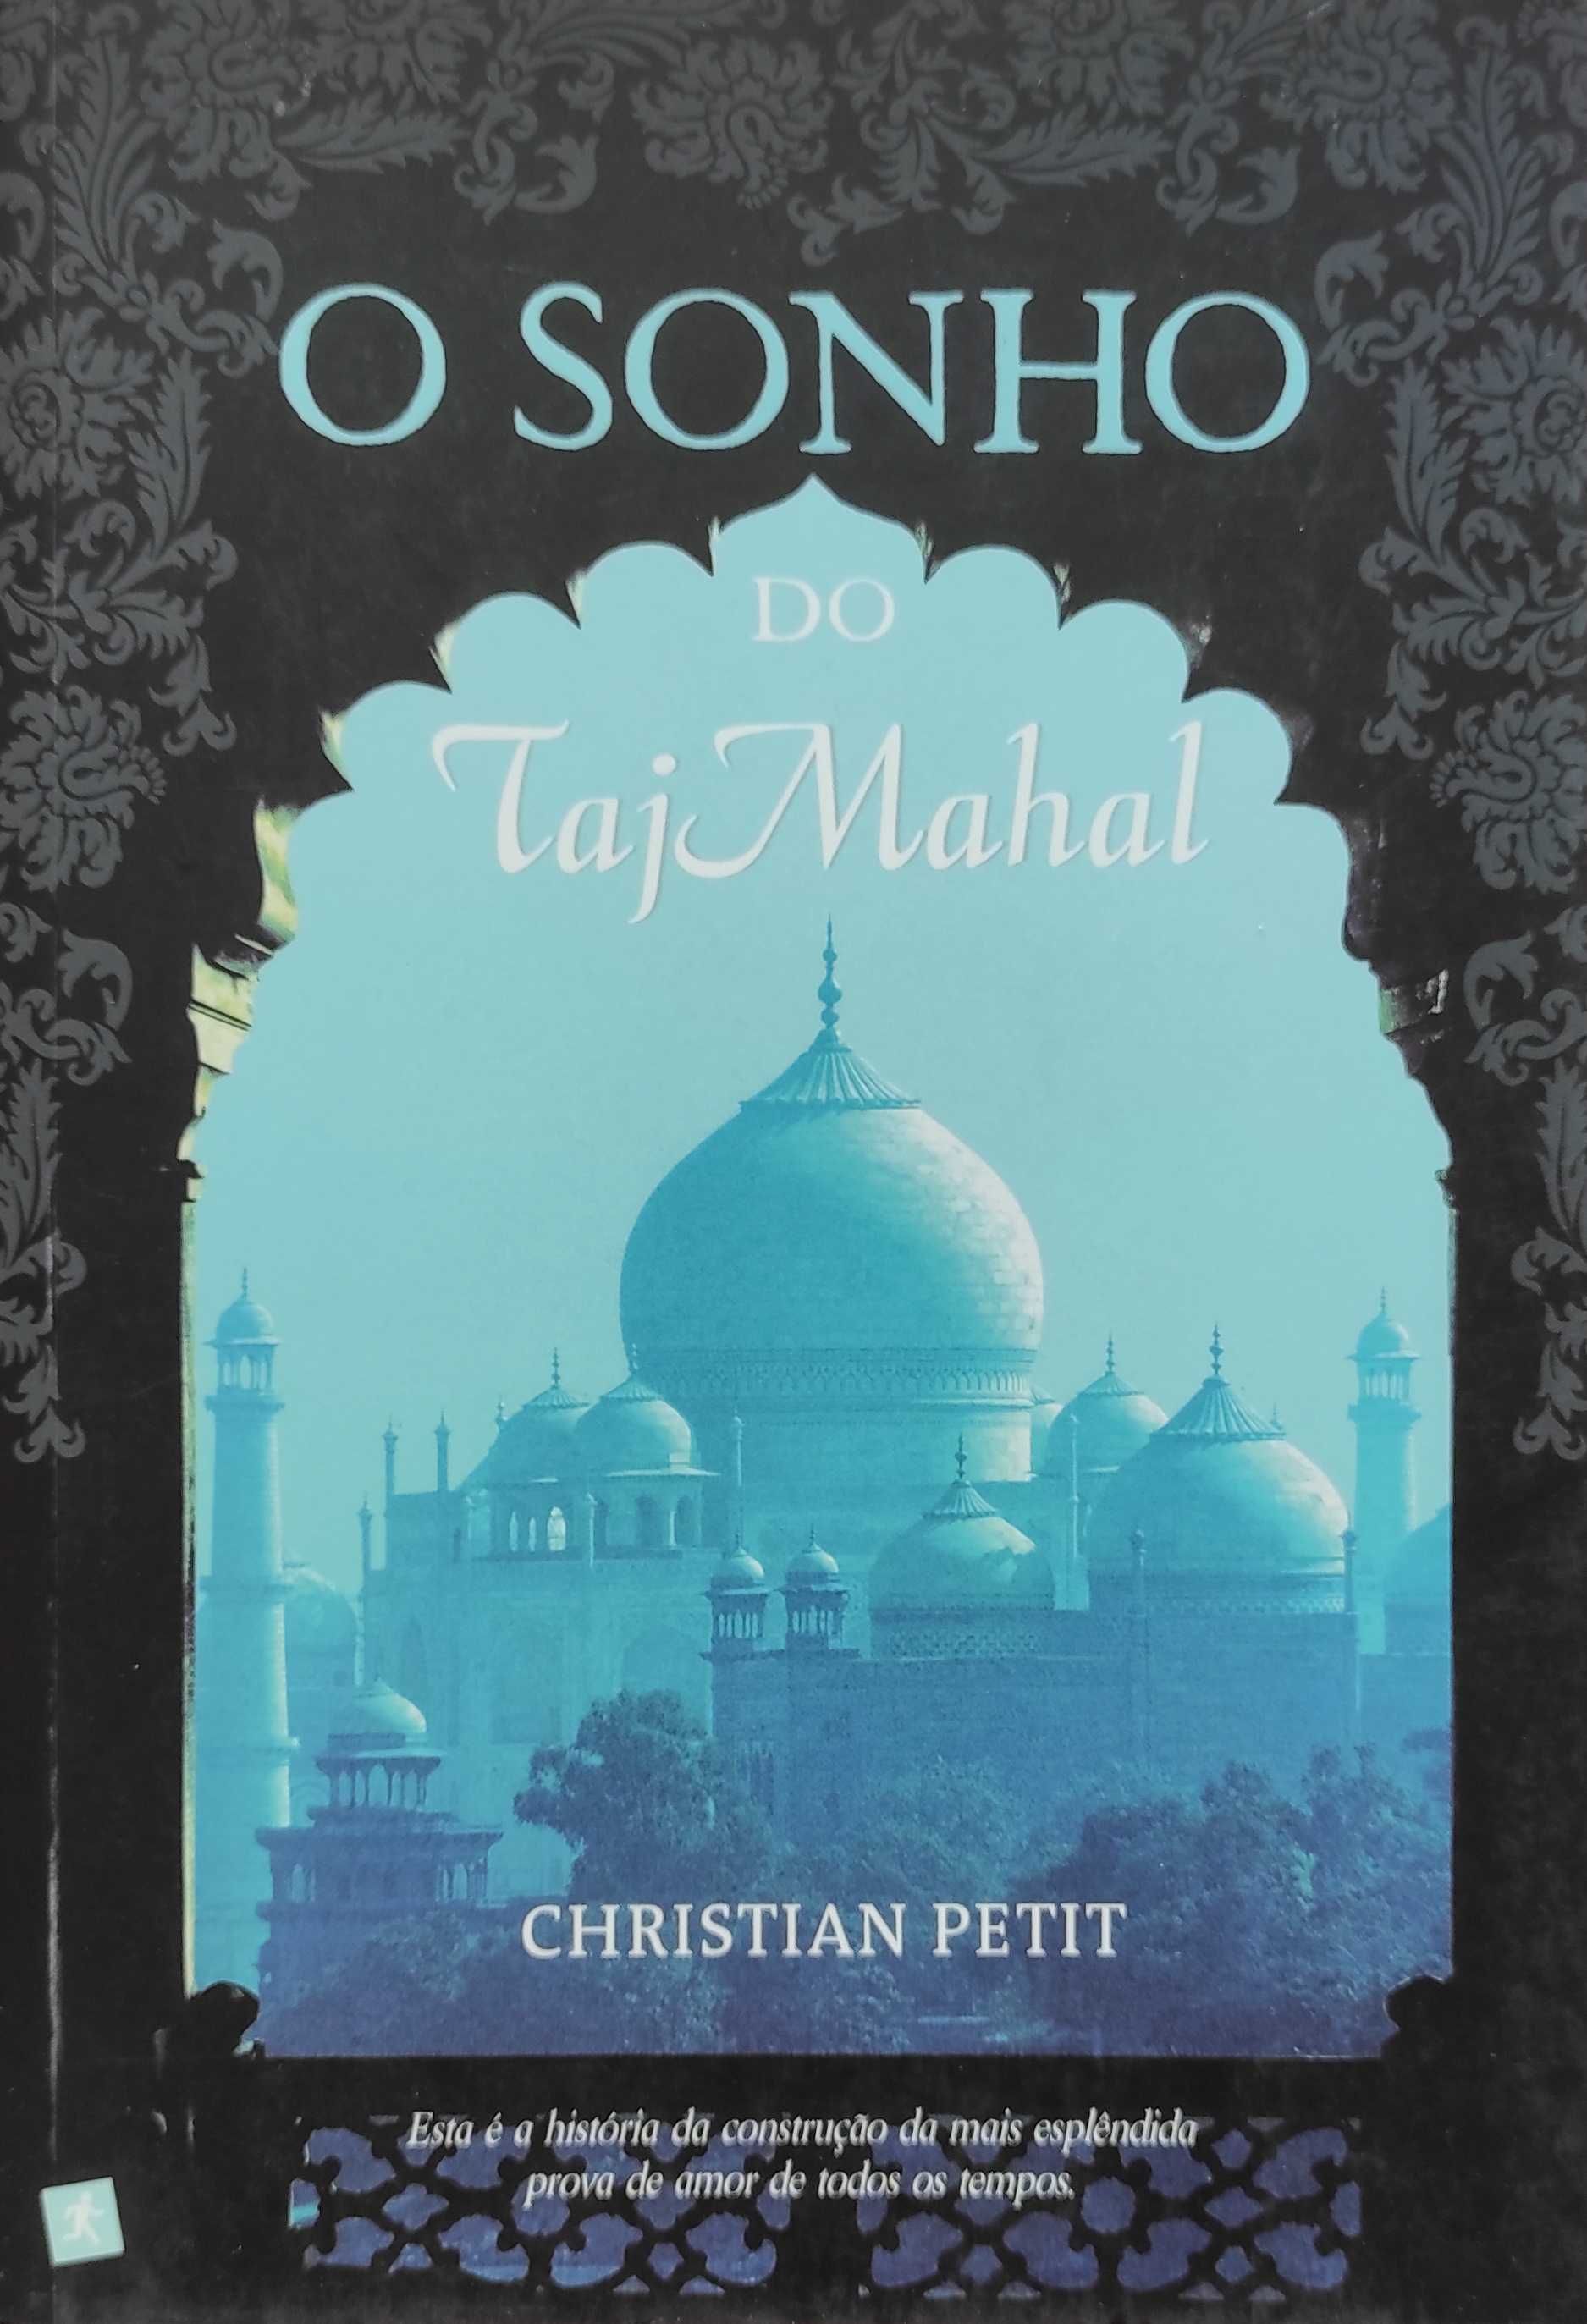 O Sonho do Taj Mahal, de Christian Petit